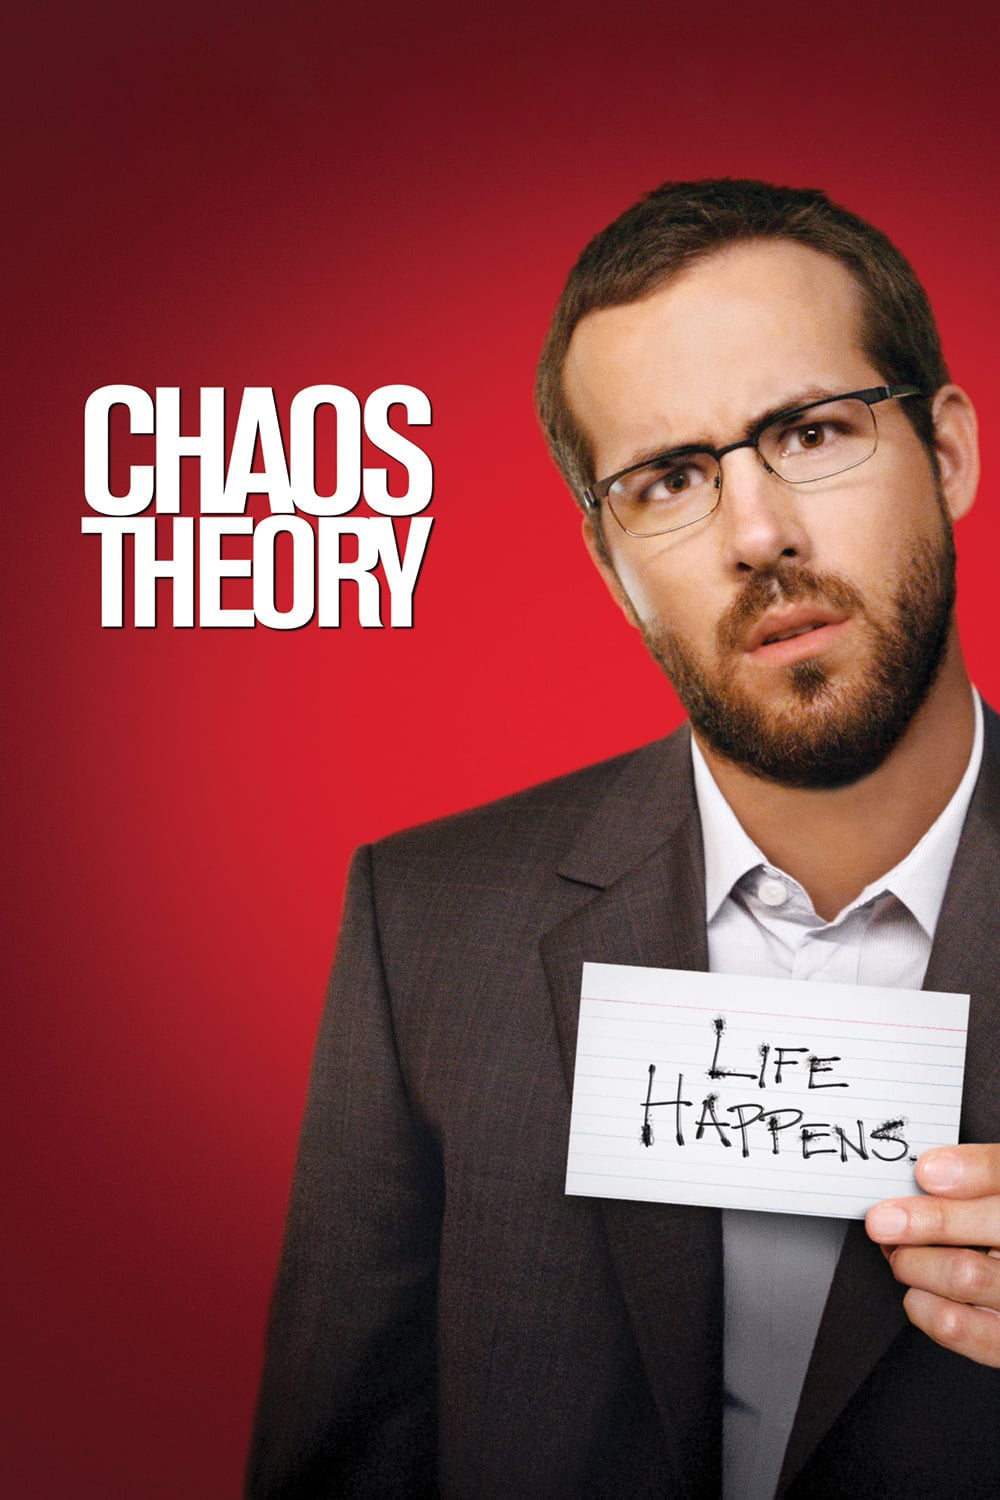 Plakat von "Chaos Theory"